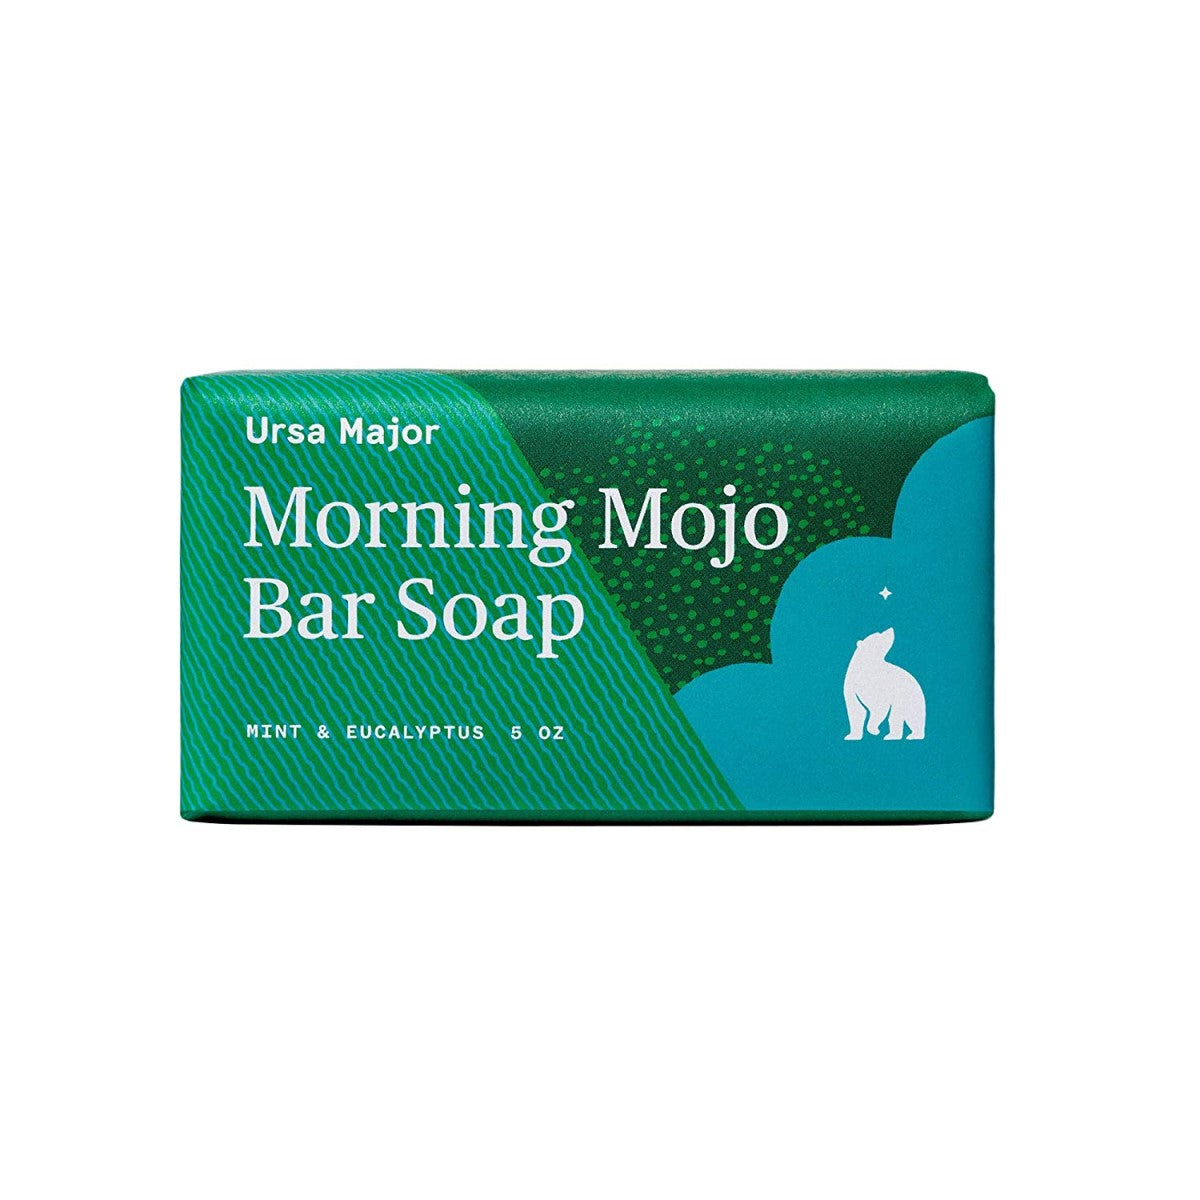 Primary Image of Morning Mojo Bar Soap